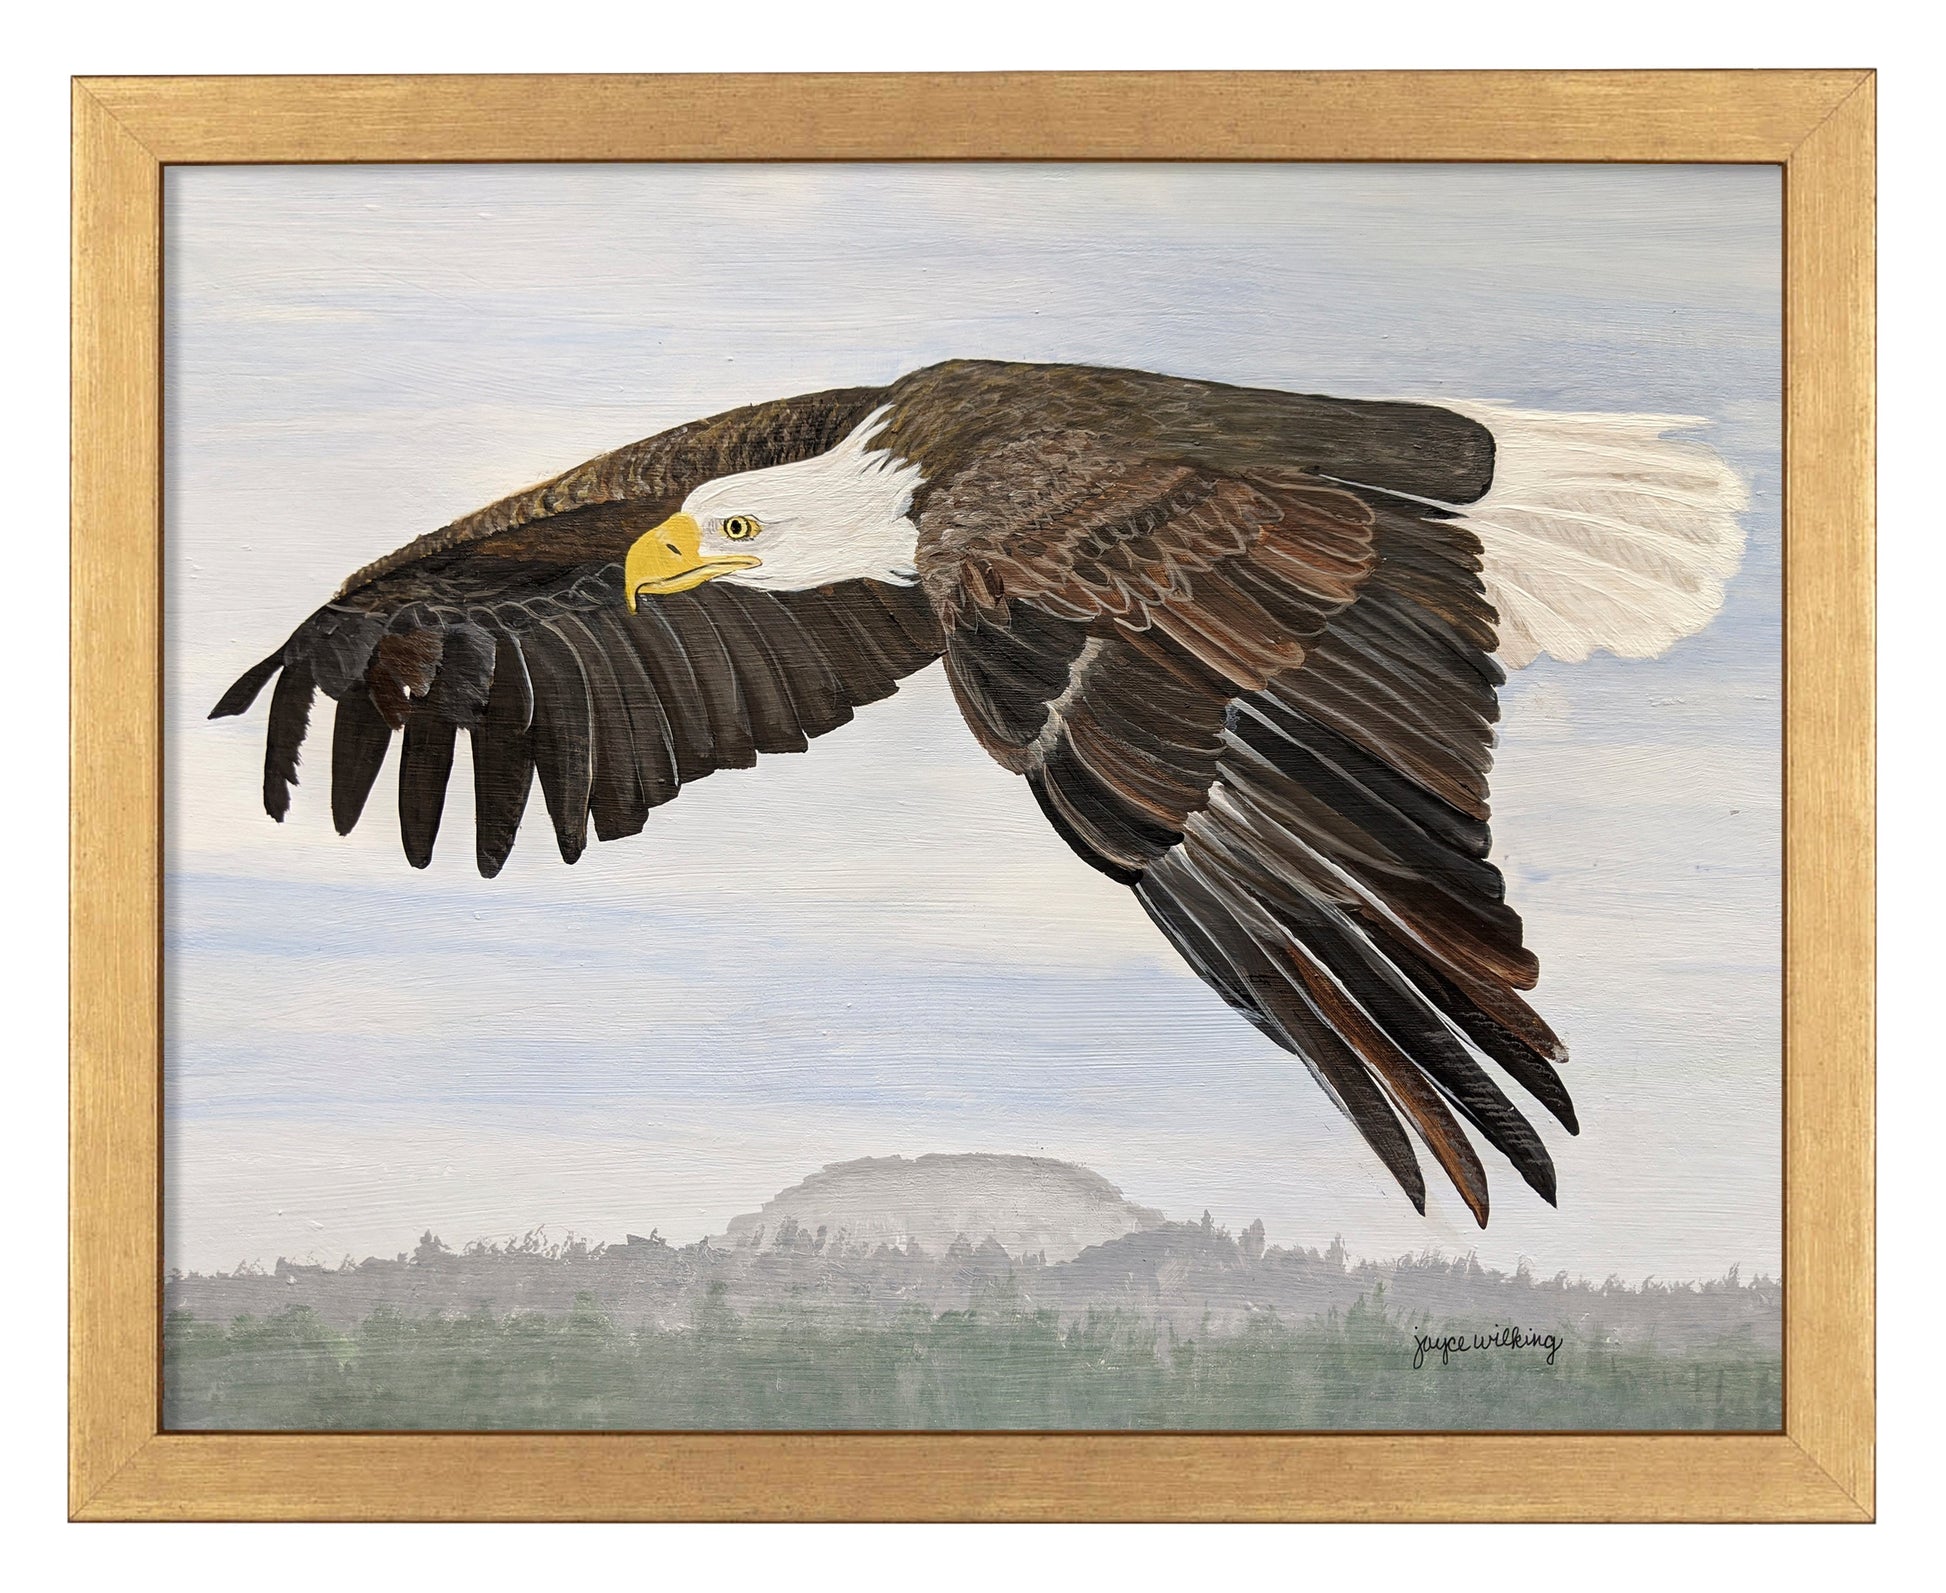 Bald Eagle Flying Bent Wing - Art Prints